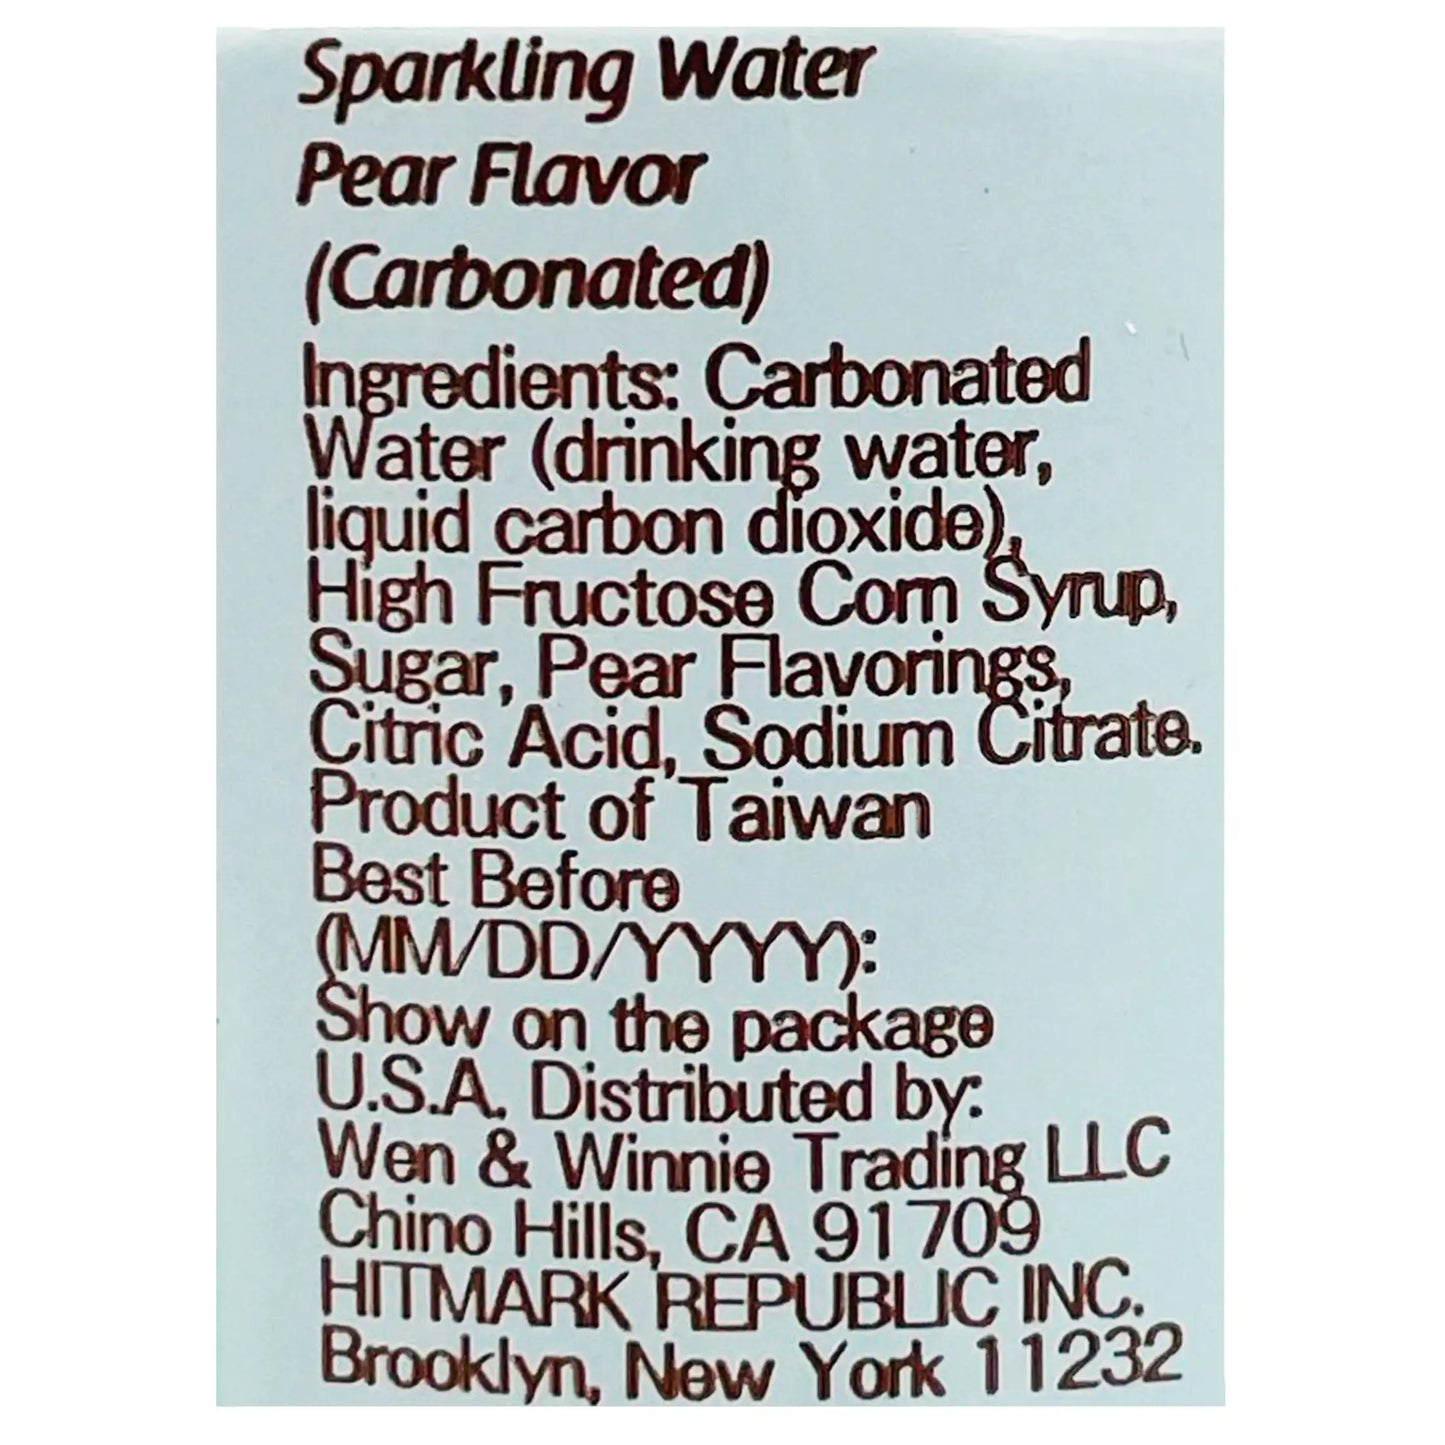 Sailormoon Drink Oceanbomb Pear Flavor Carbonated Drink 330 ml